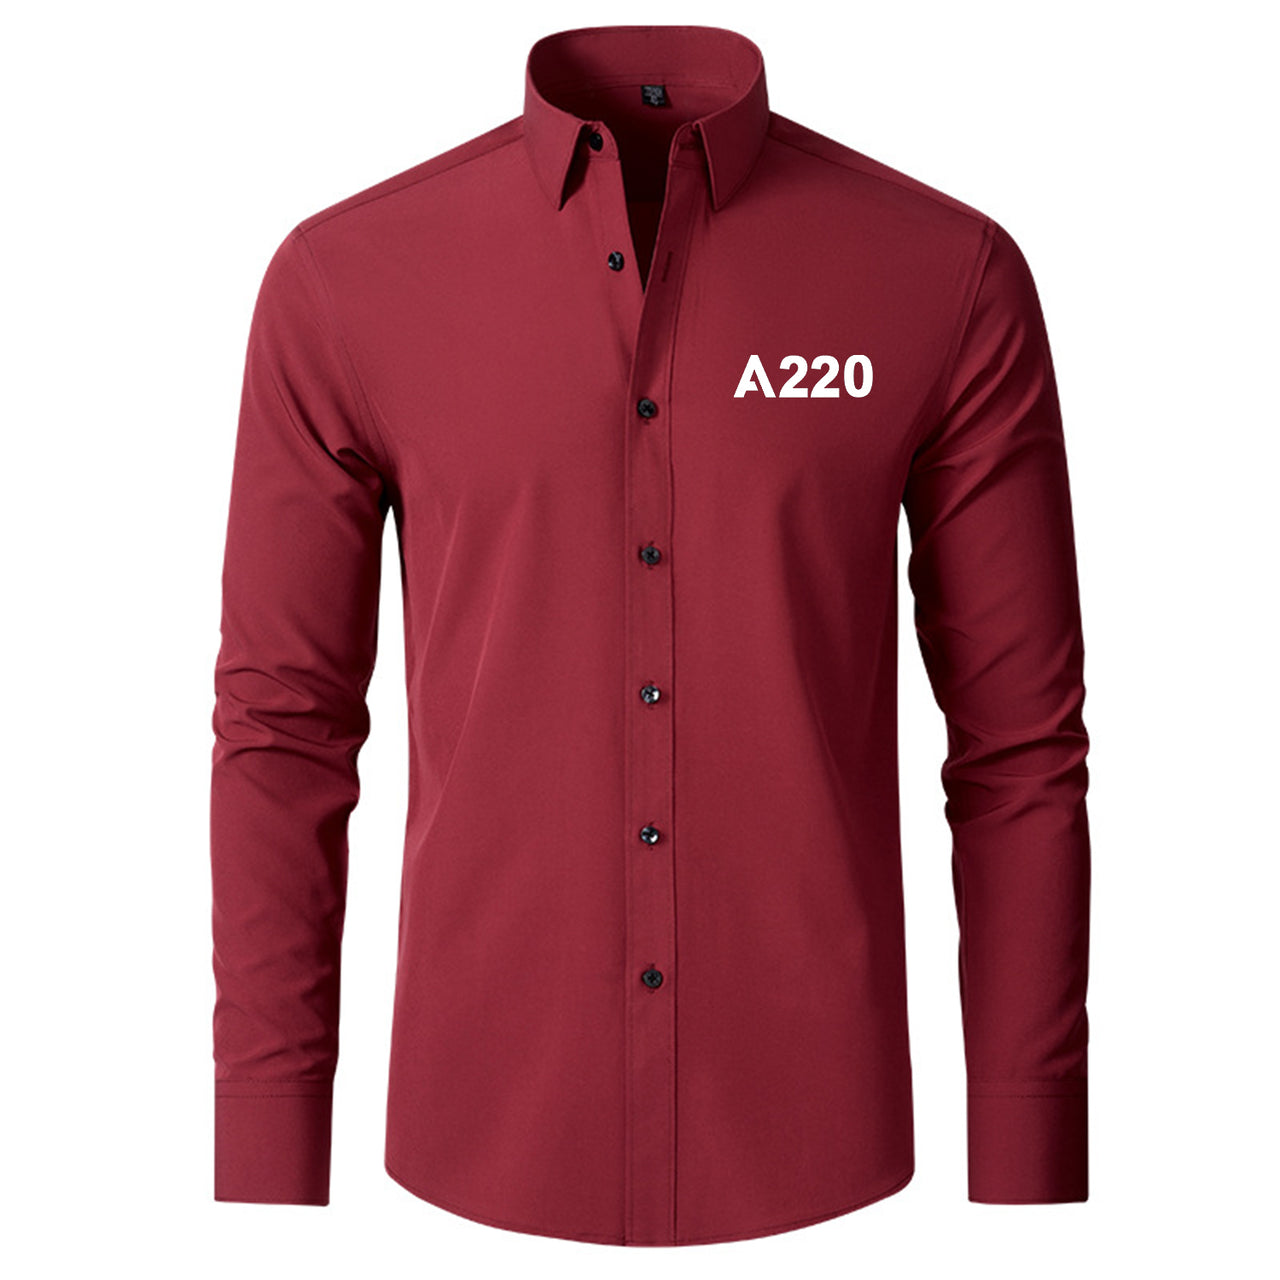 A220 Flat Text Designed Long Sleeve Shirts